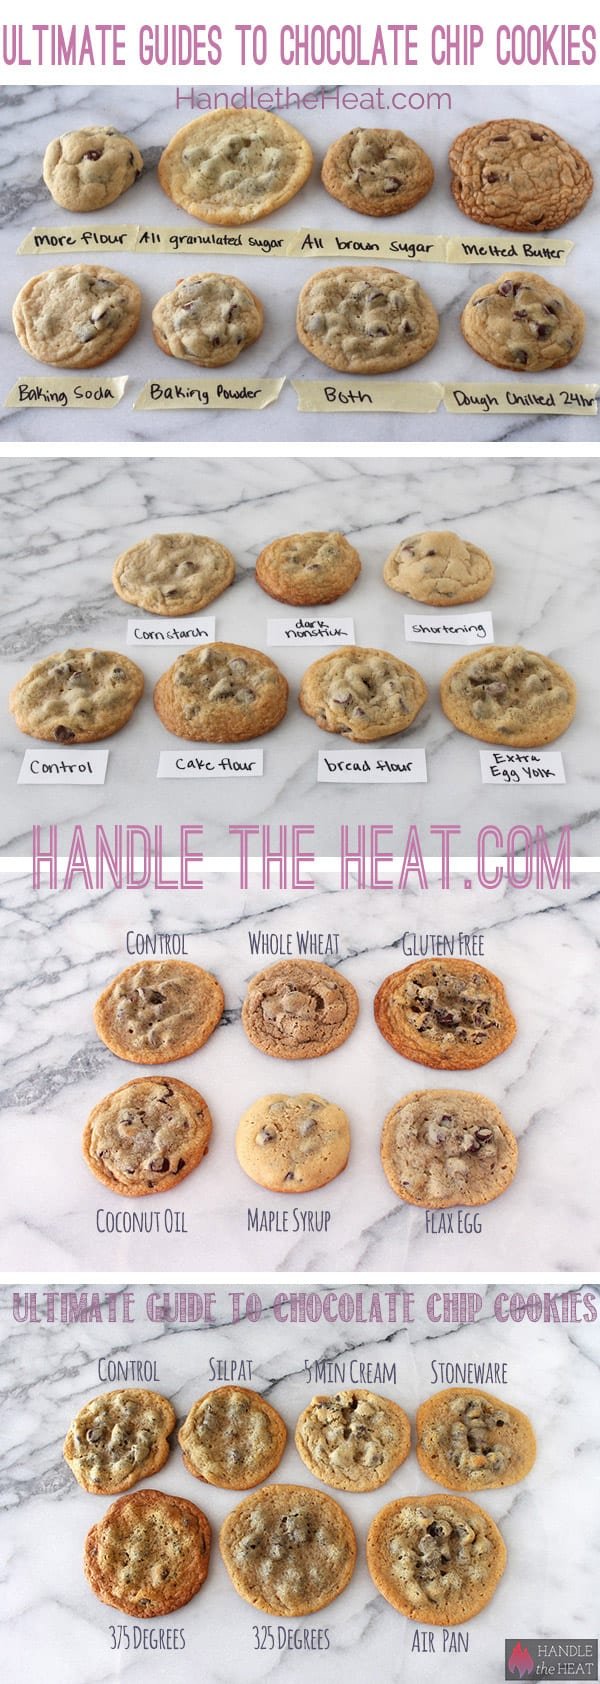 Cookie Baking Tips